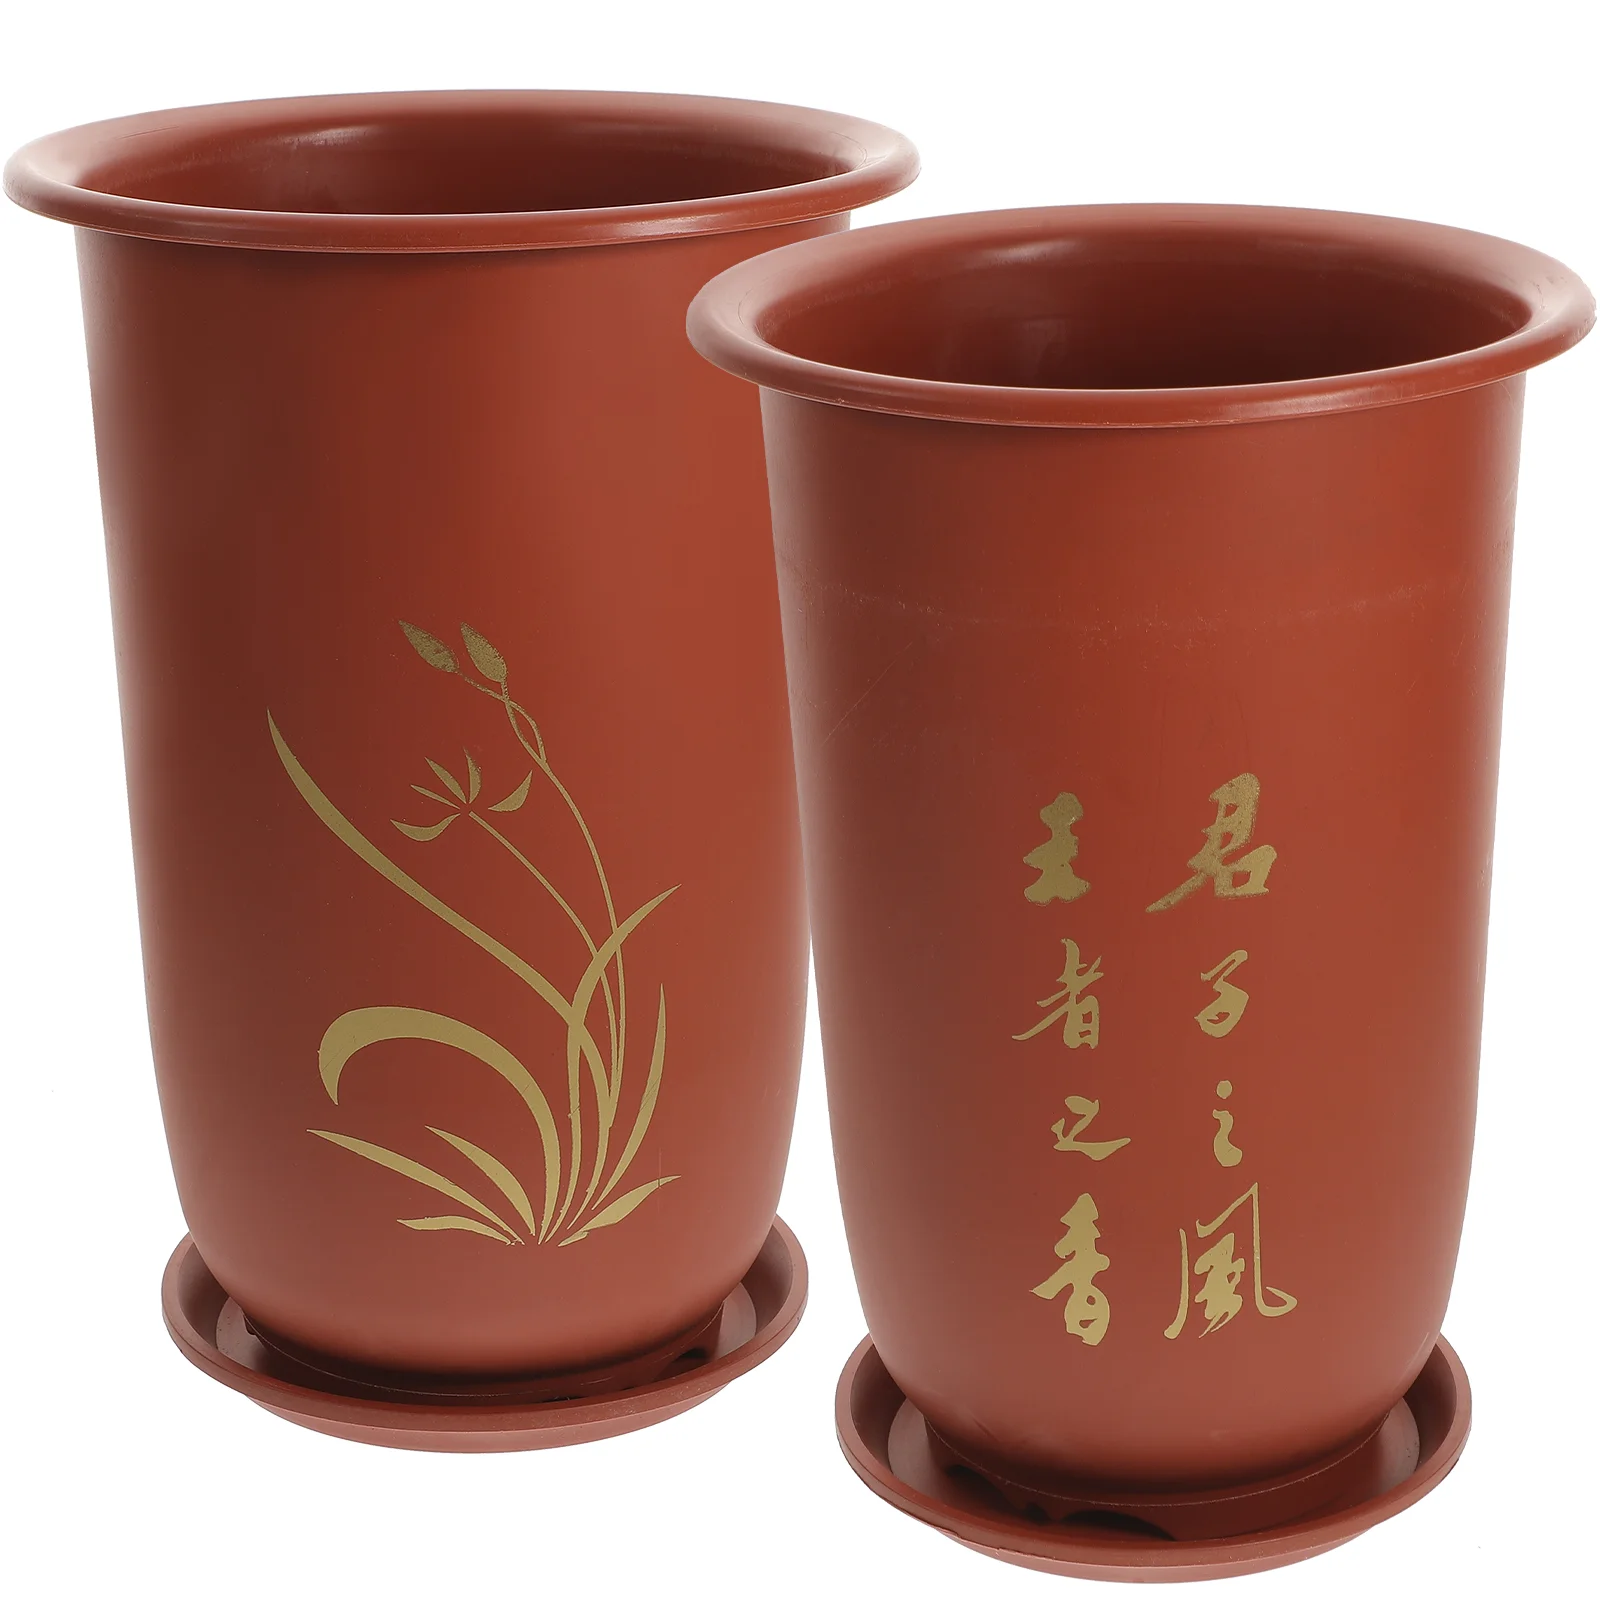 

Orchid Flower Pot Vintage Chinese Style Decorative Flowerpot Display Stand Resin Planter Succulent Pots Cactus Bonsai